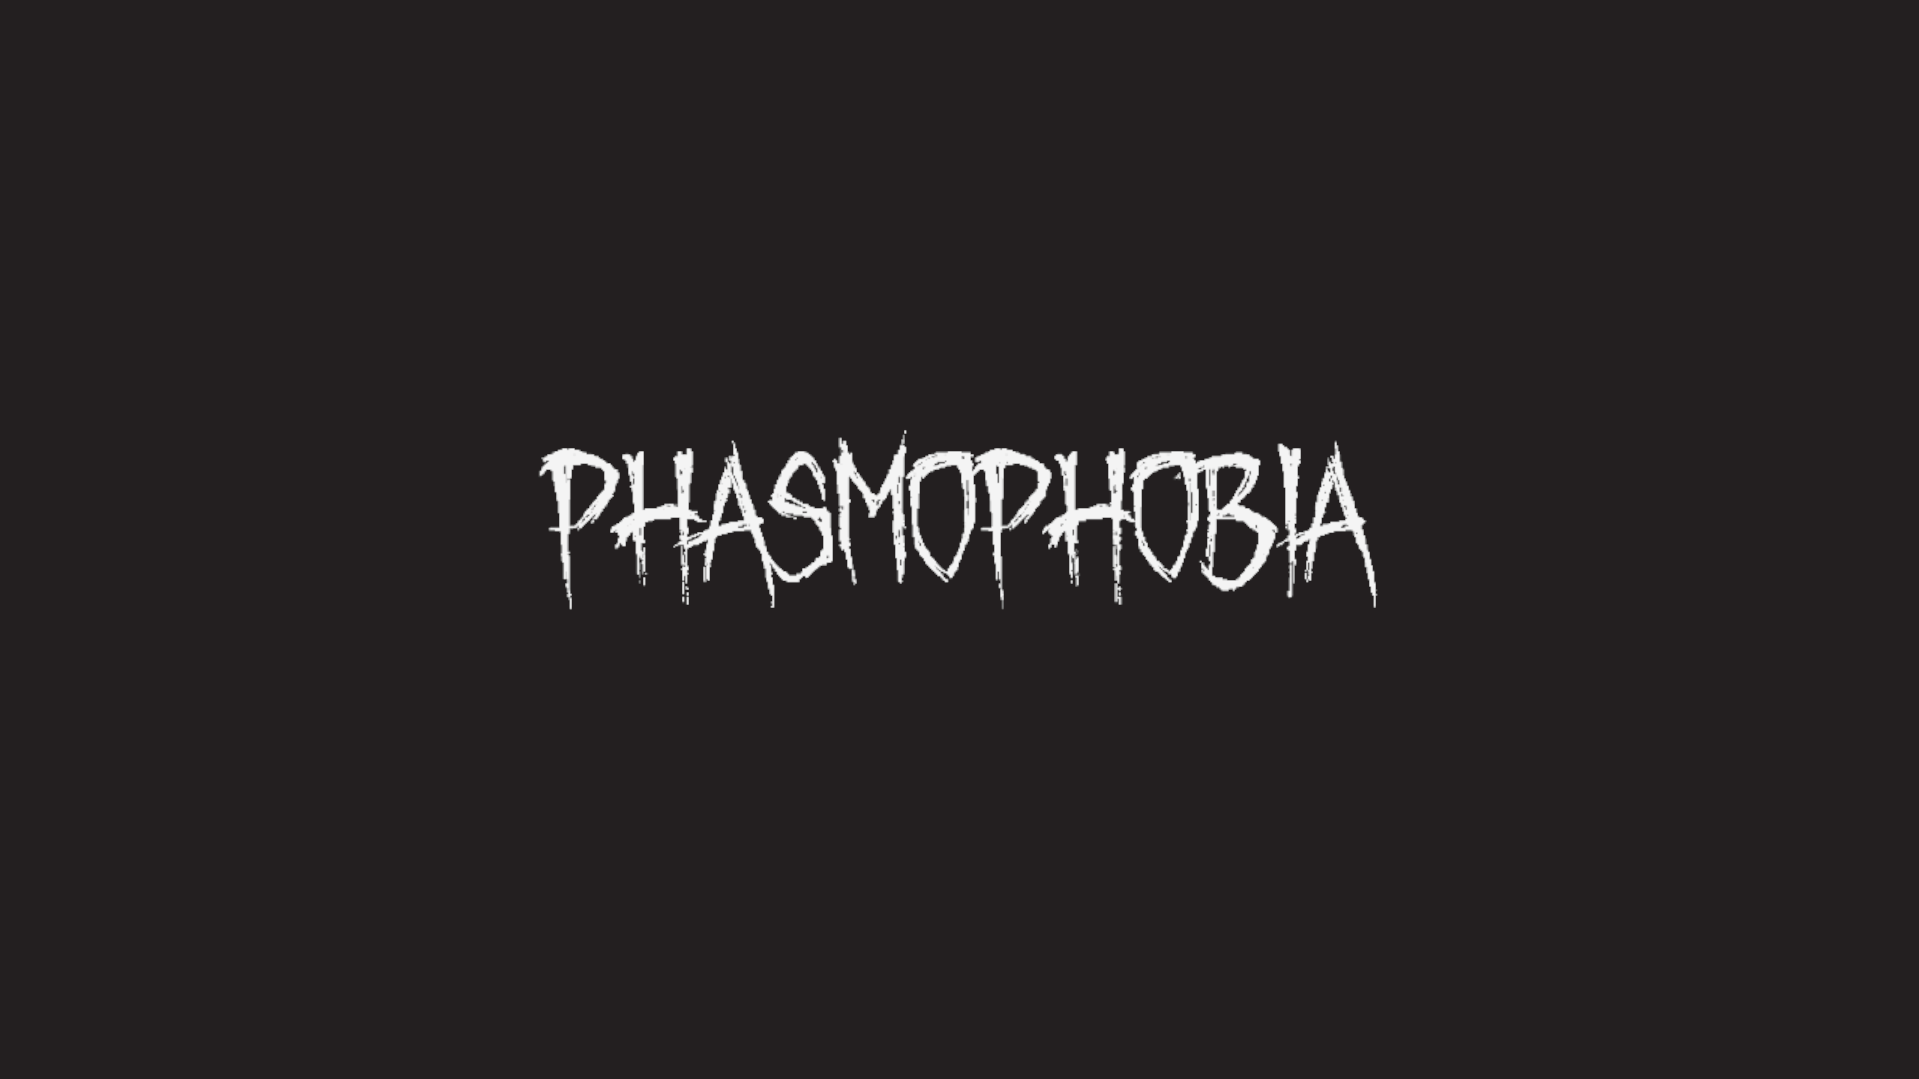 команды для разговора phasmophobia фото 50